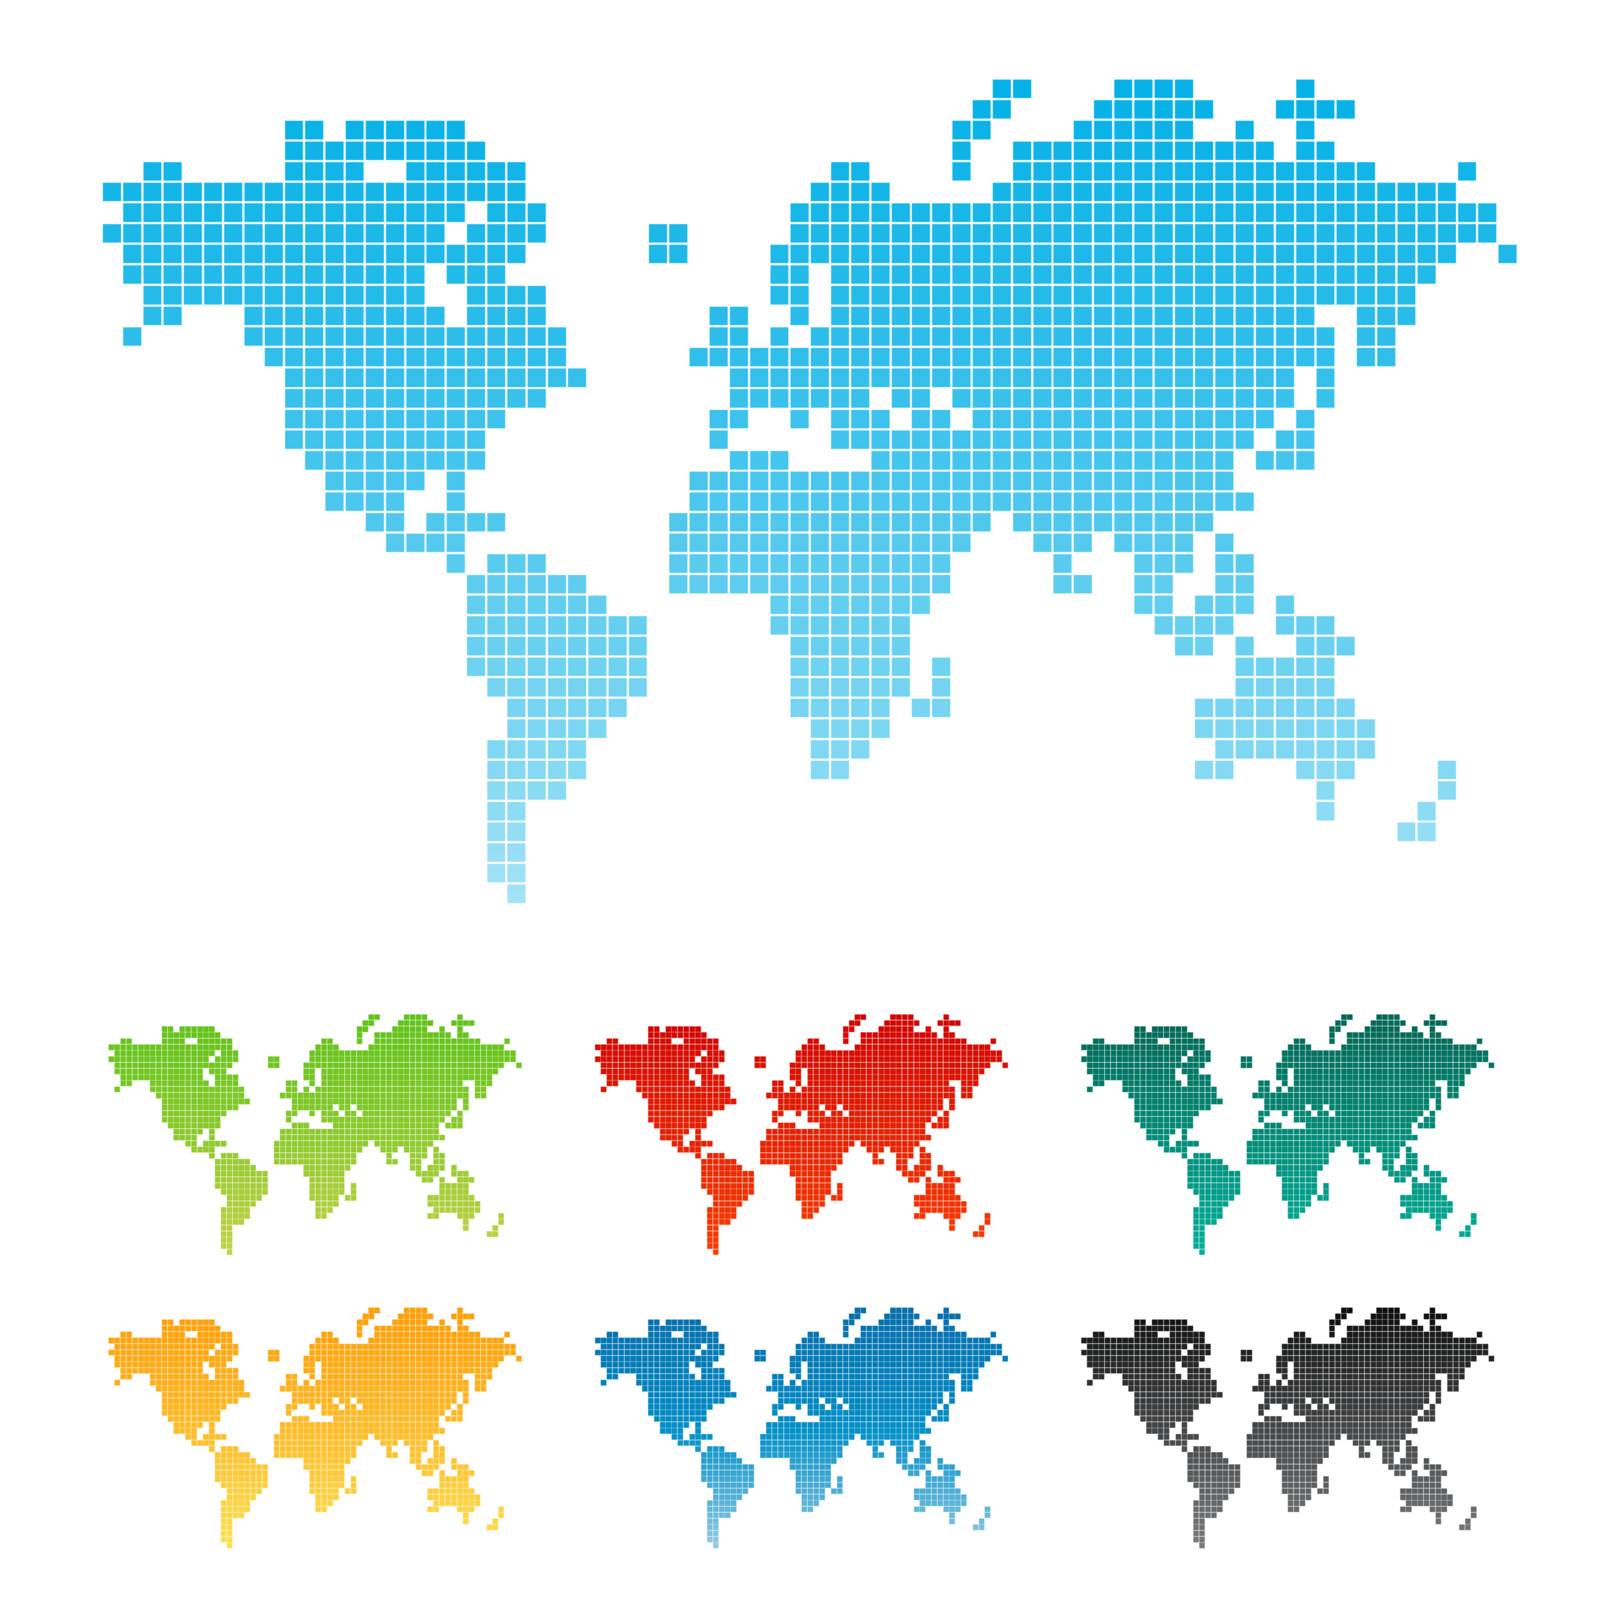 Pixelated world map by domencolja